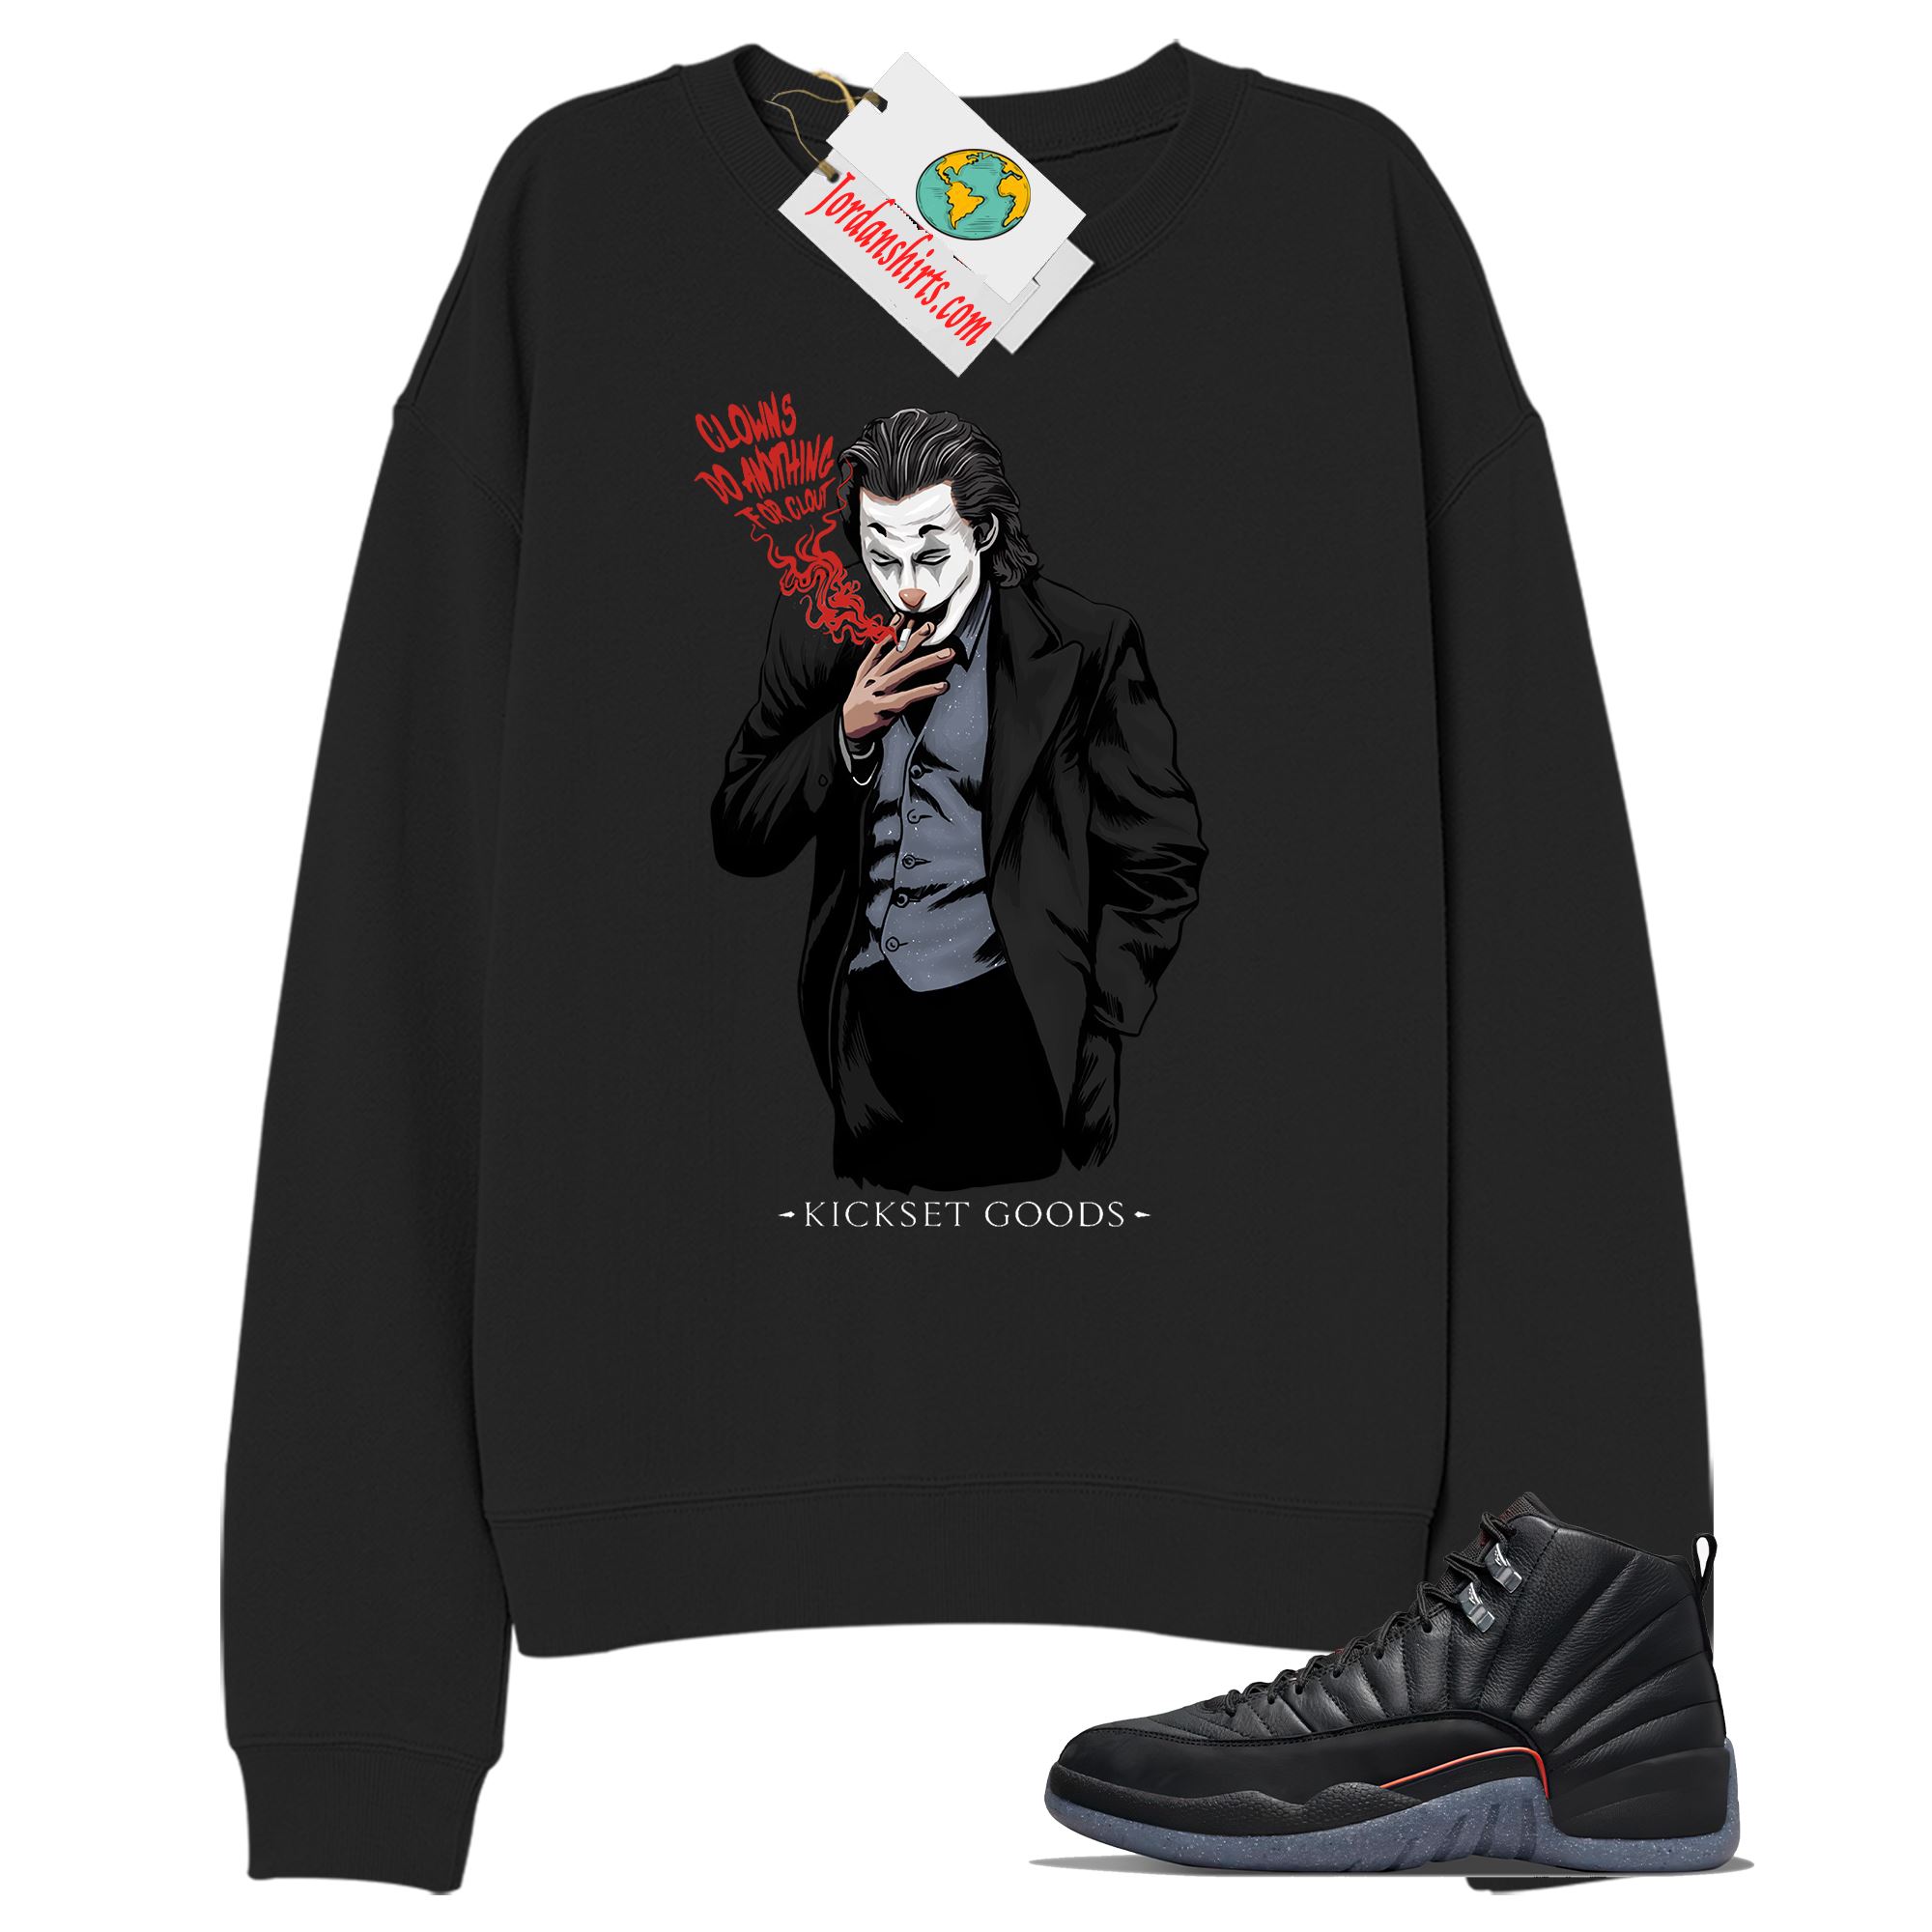 Jordan 12 Sweatshirt, Joker Black Sweatshirt Air Jordan 12 Utility Grind 12s Size Up To 5xl